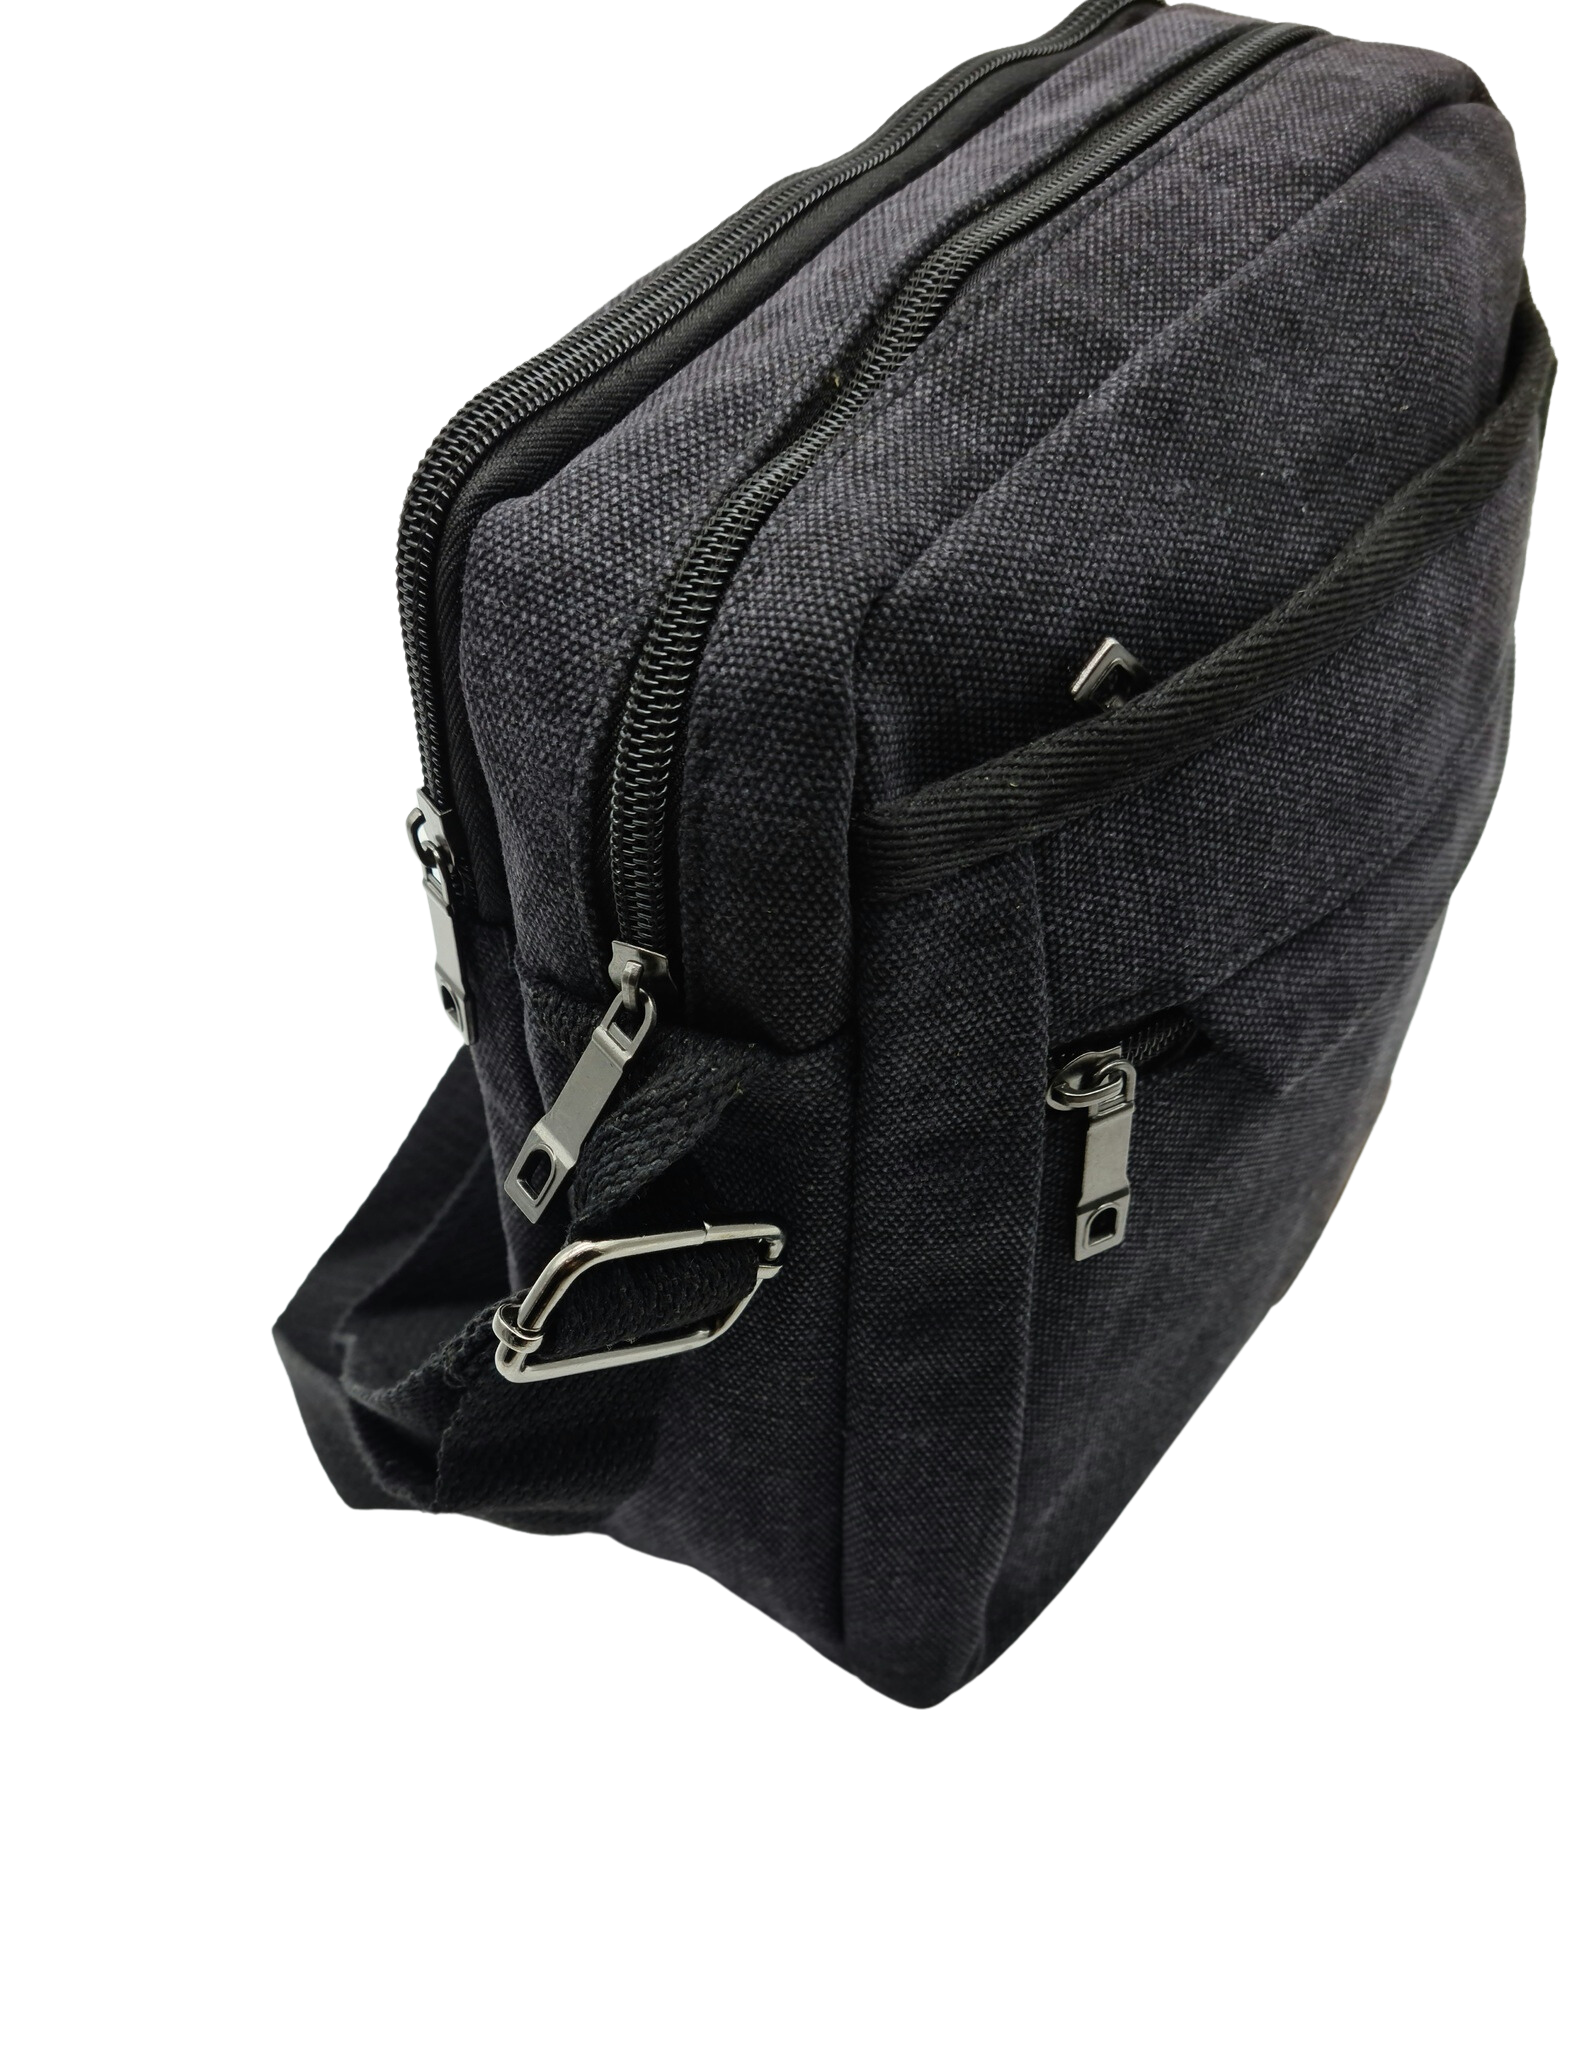 Across canvas shoulder bag gray color 8611 - Migant